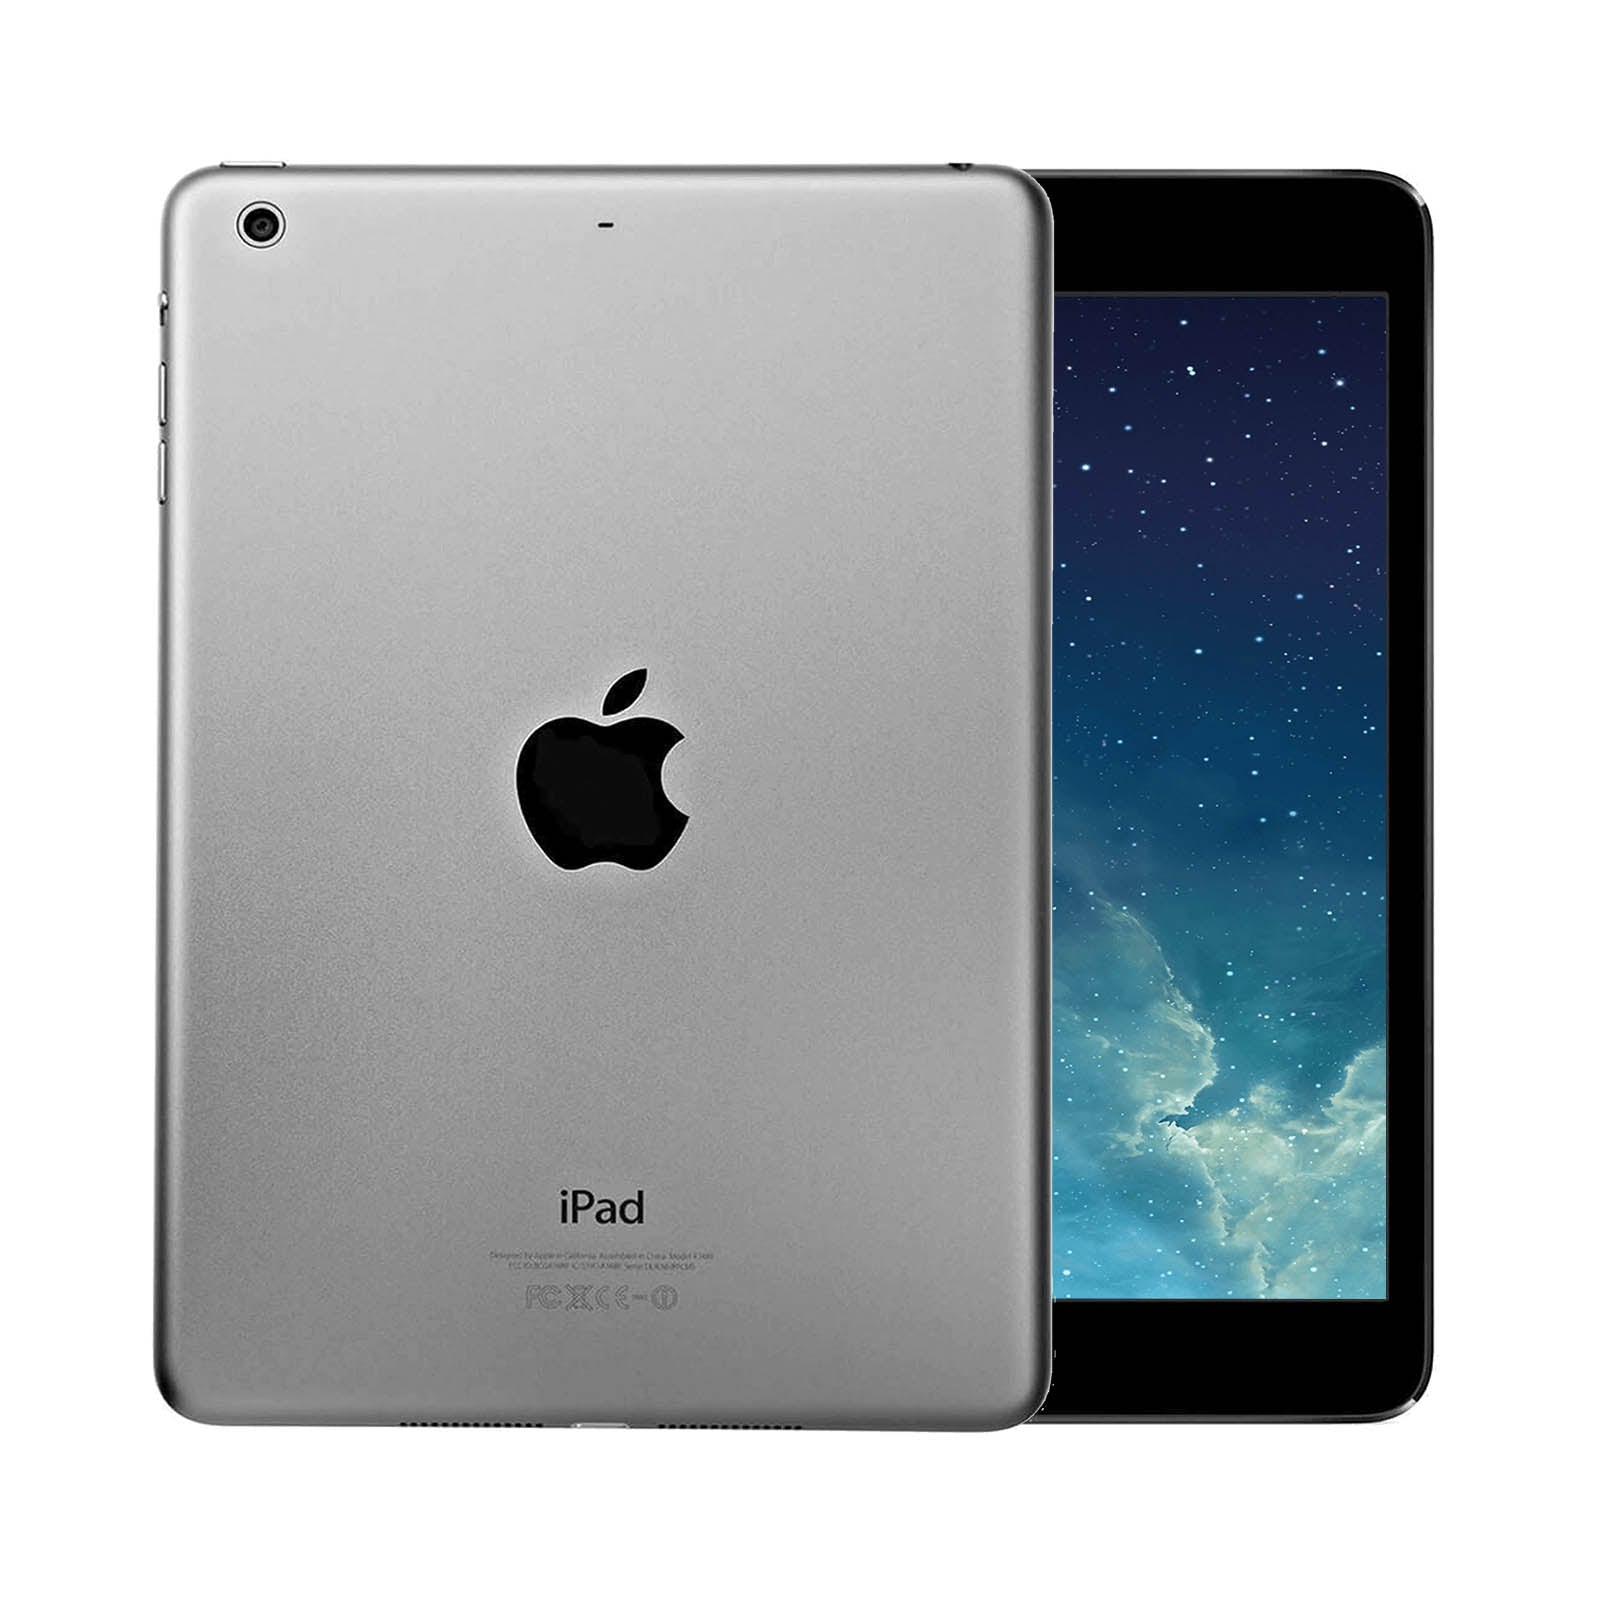 iPad Air 16GB WiFi Space Grey Very Good-Unlocked